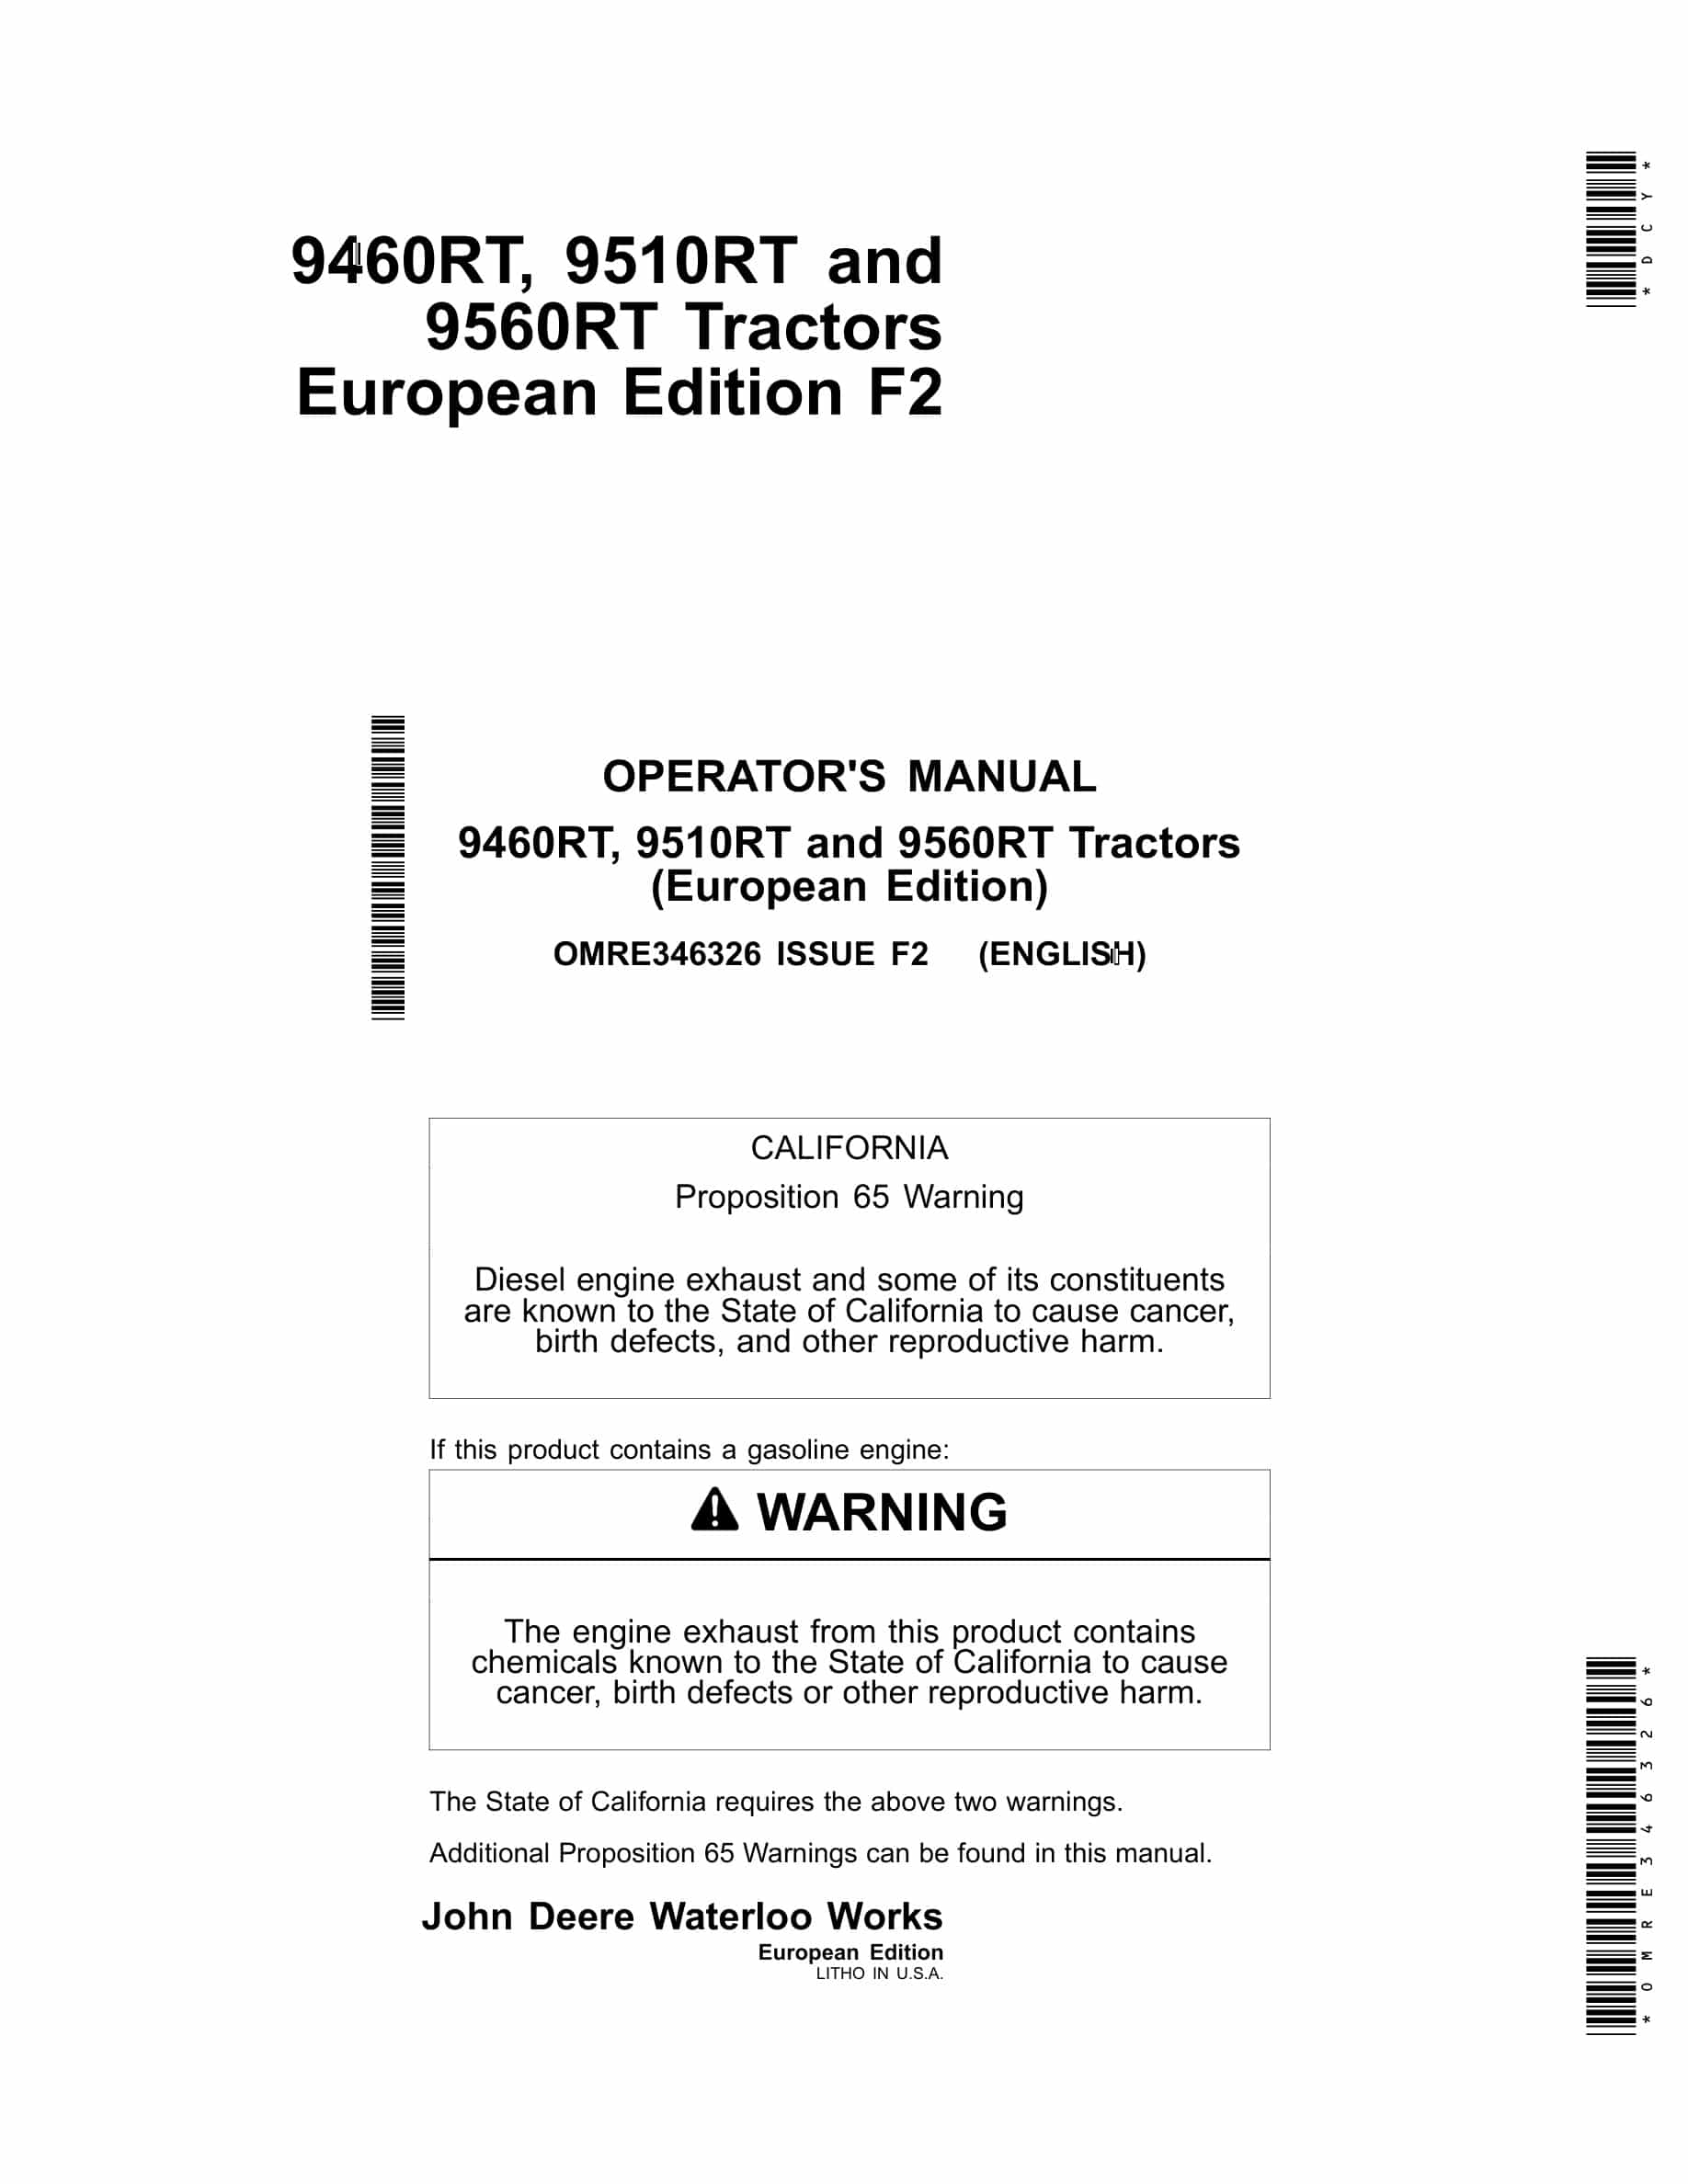 John Deere 9460rt, 9510rt And 9560rt Tractors Operator Manuals OMRE346326-1